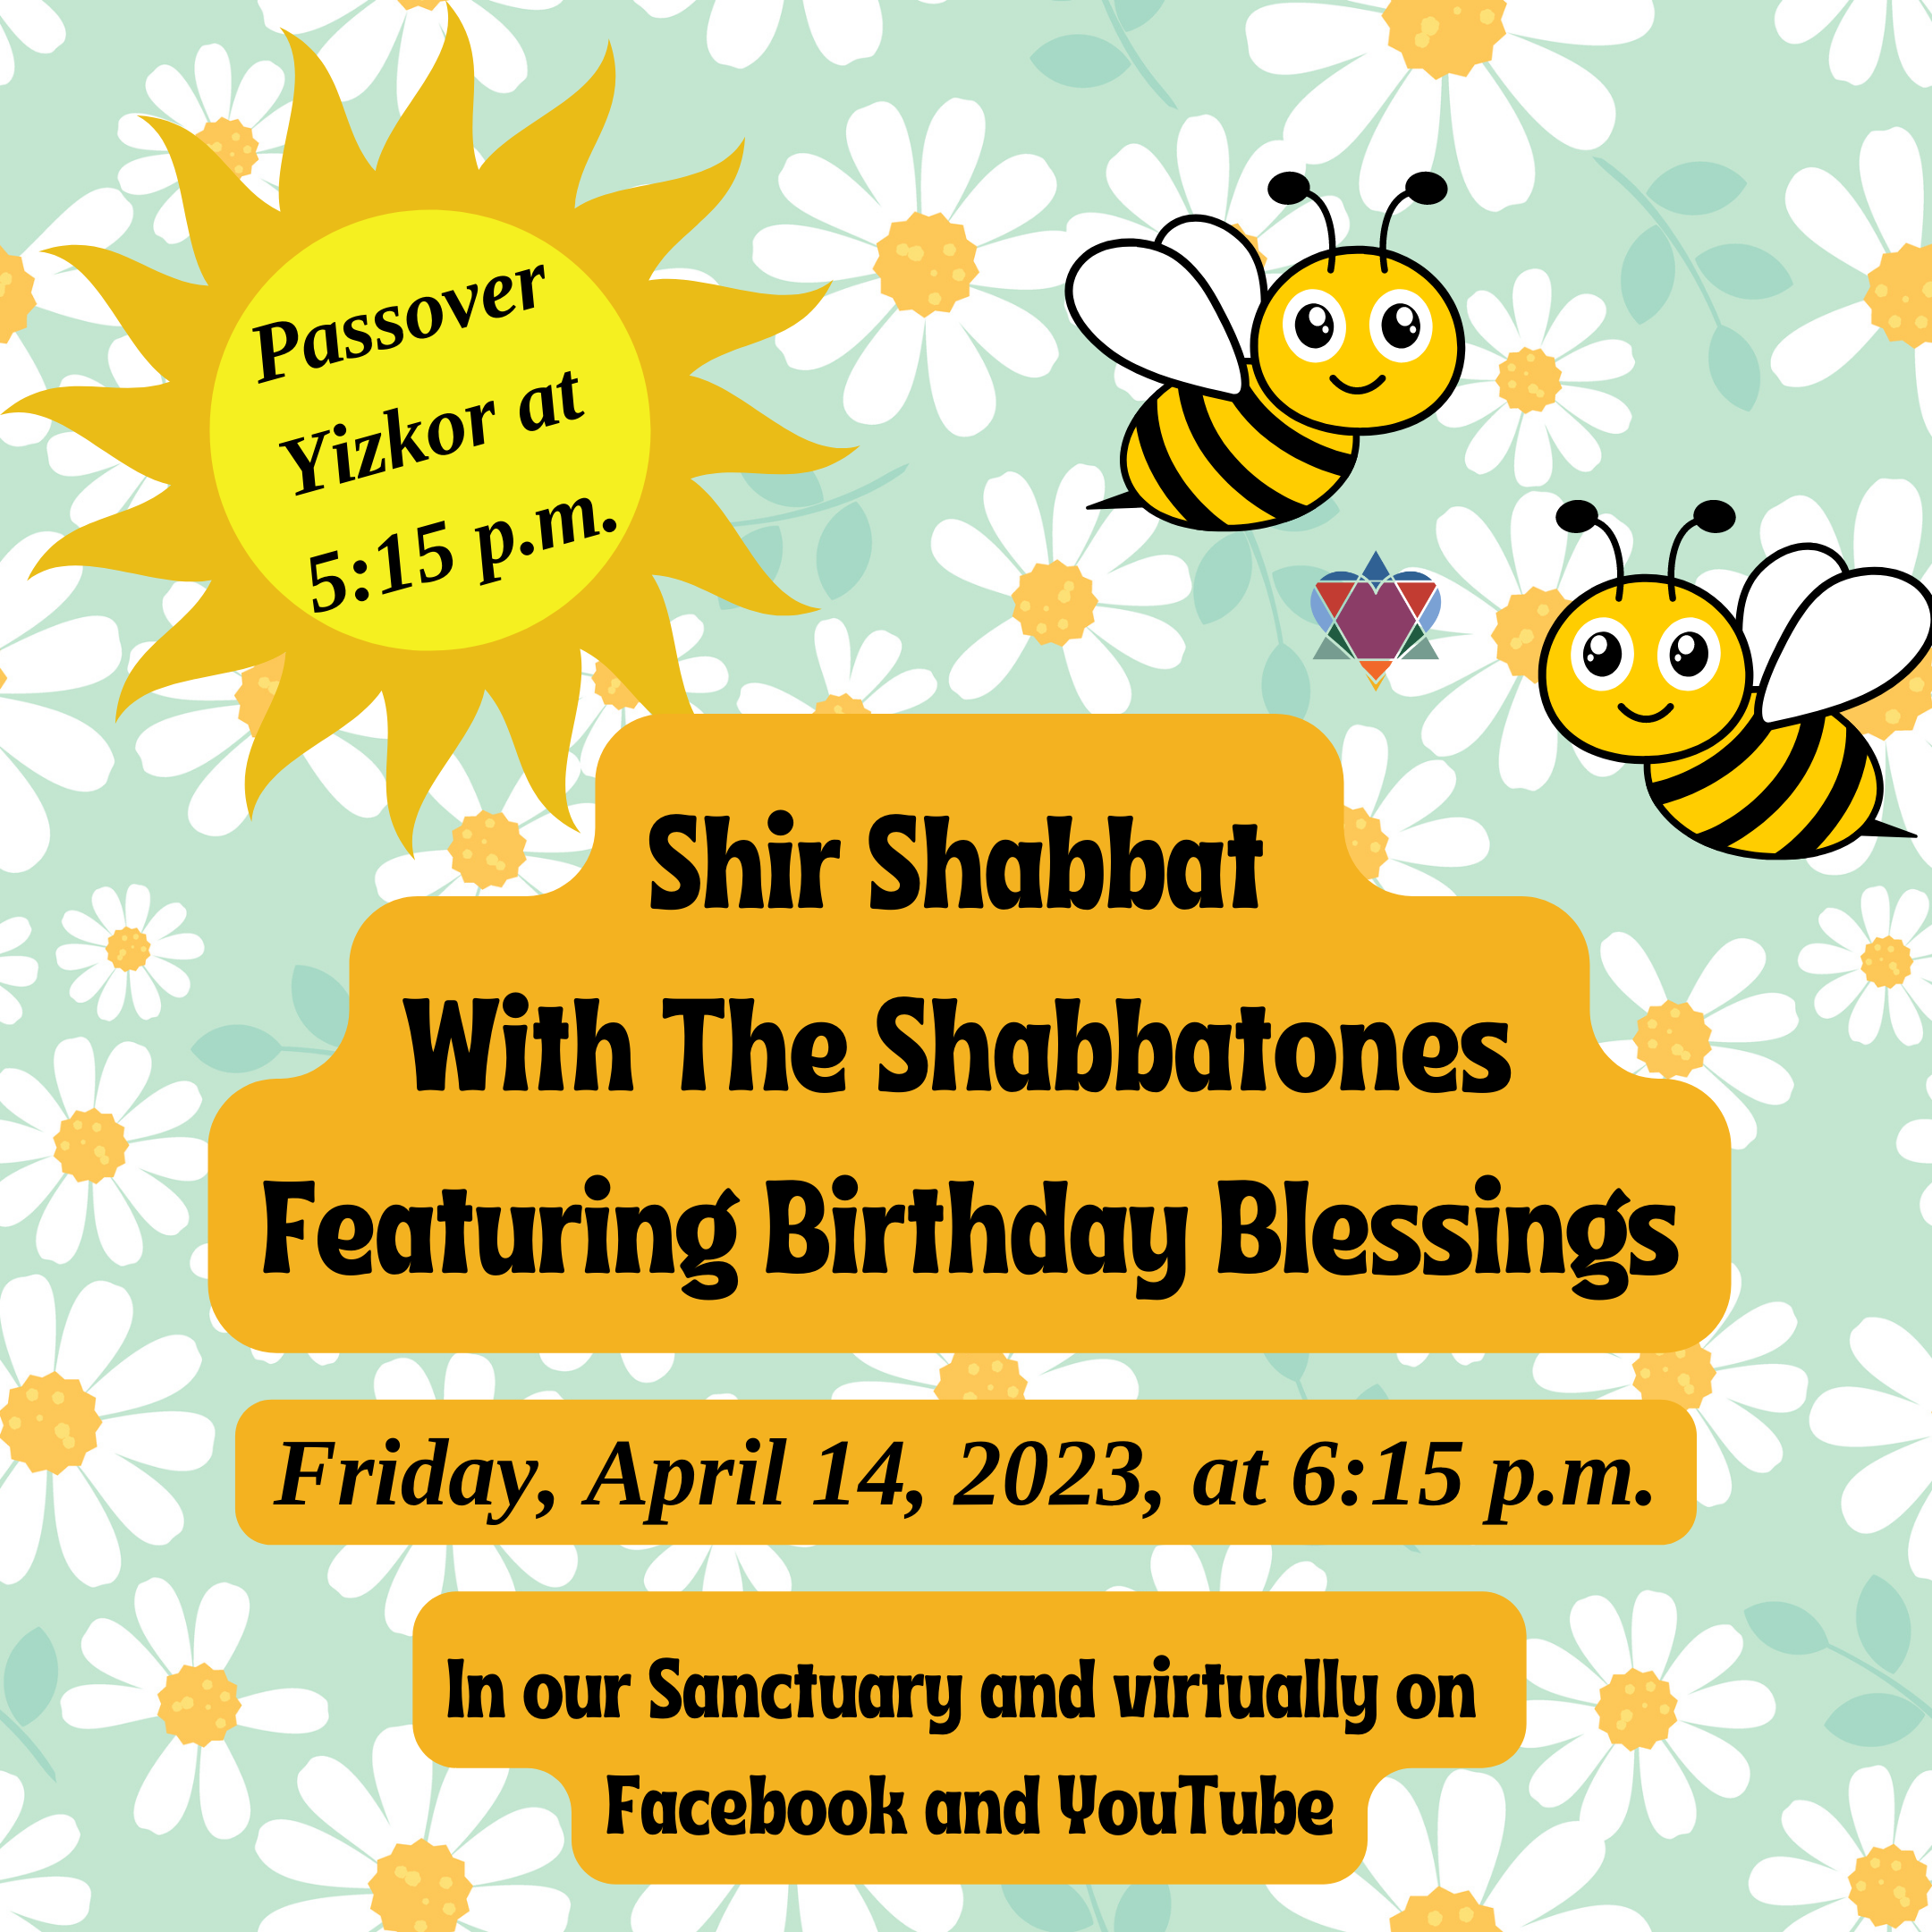 PASSOVER YIZKOR, SHIR SHABBAT WITH THE SHABBATONES FEATURING BIRTHDAY BLESSINGS